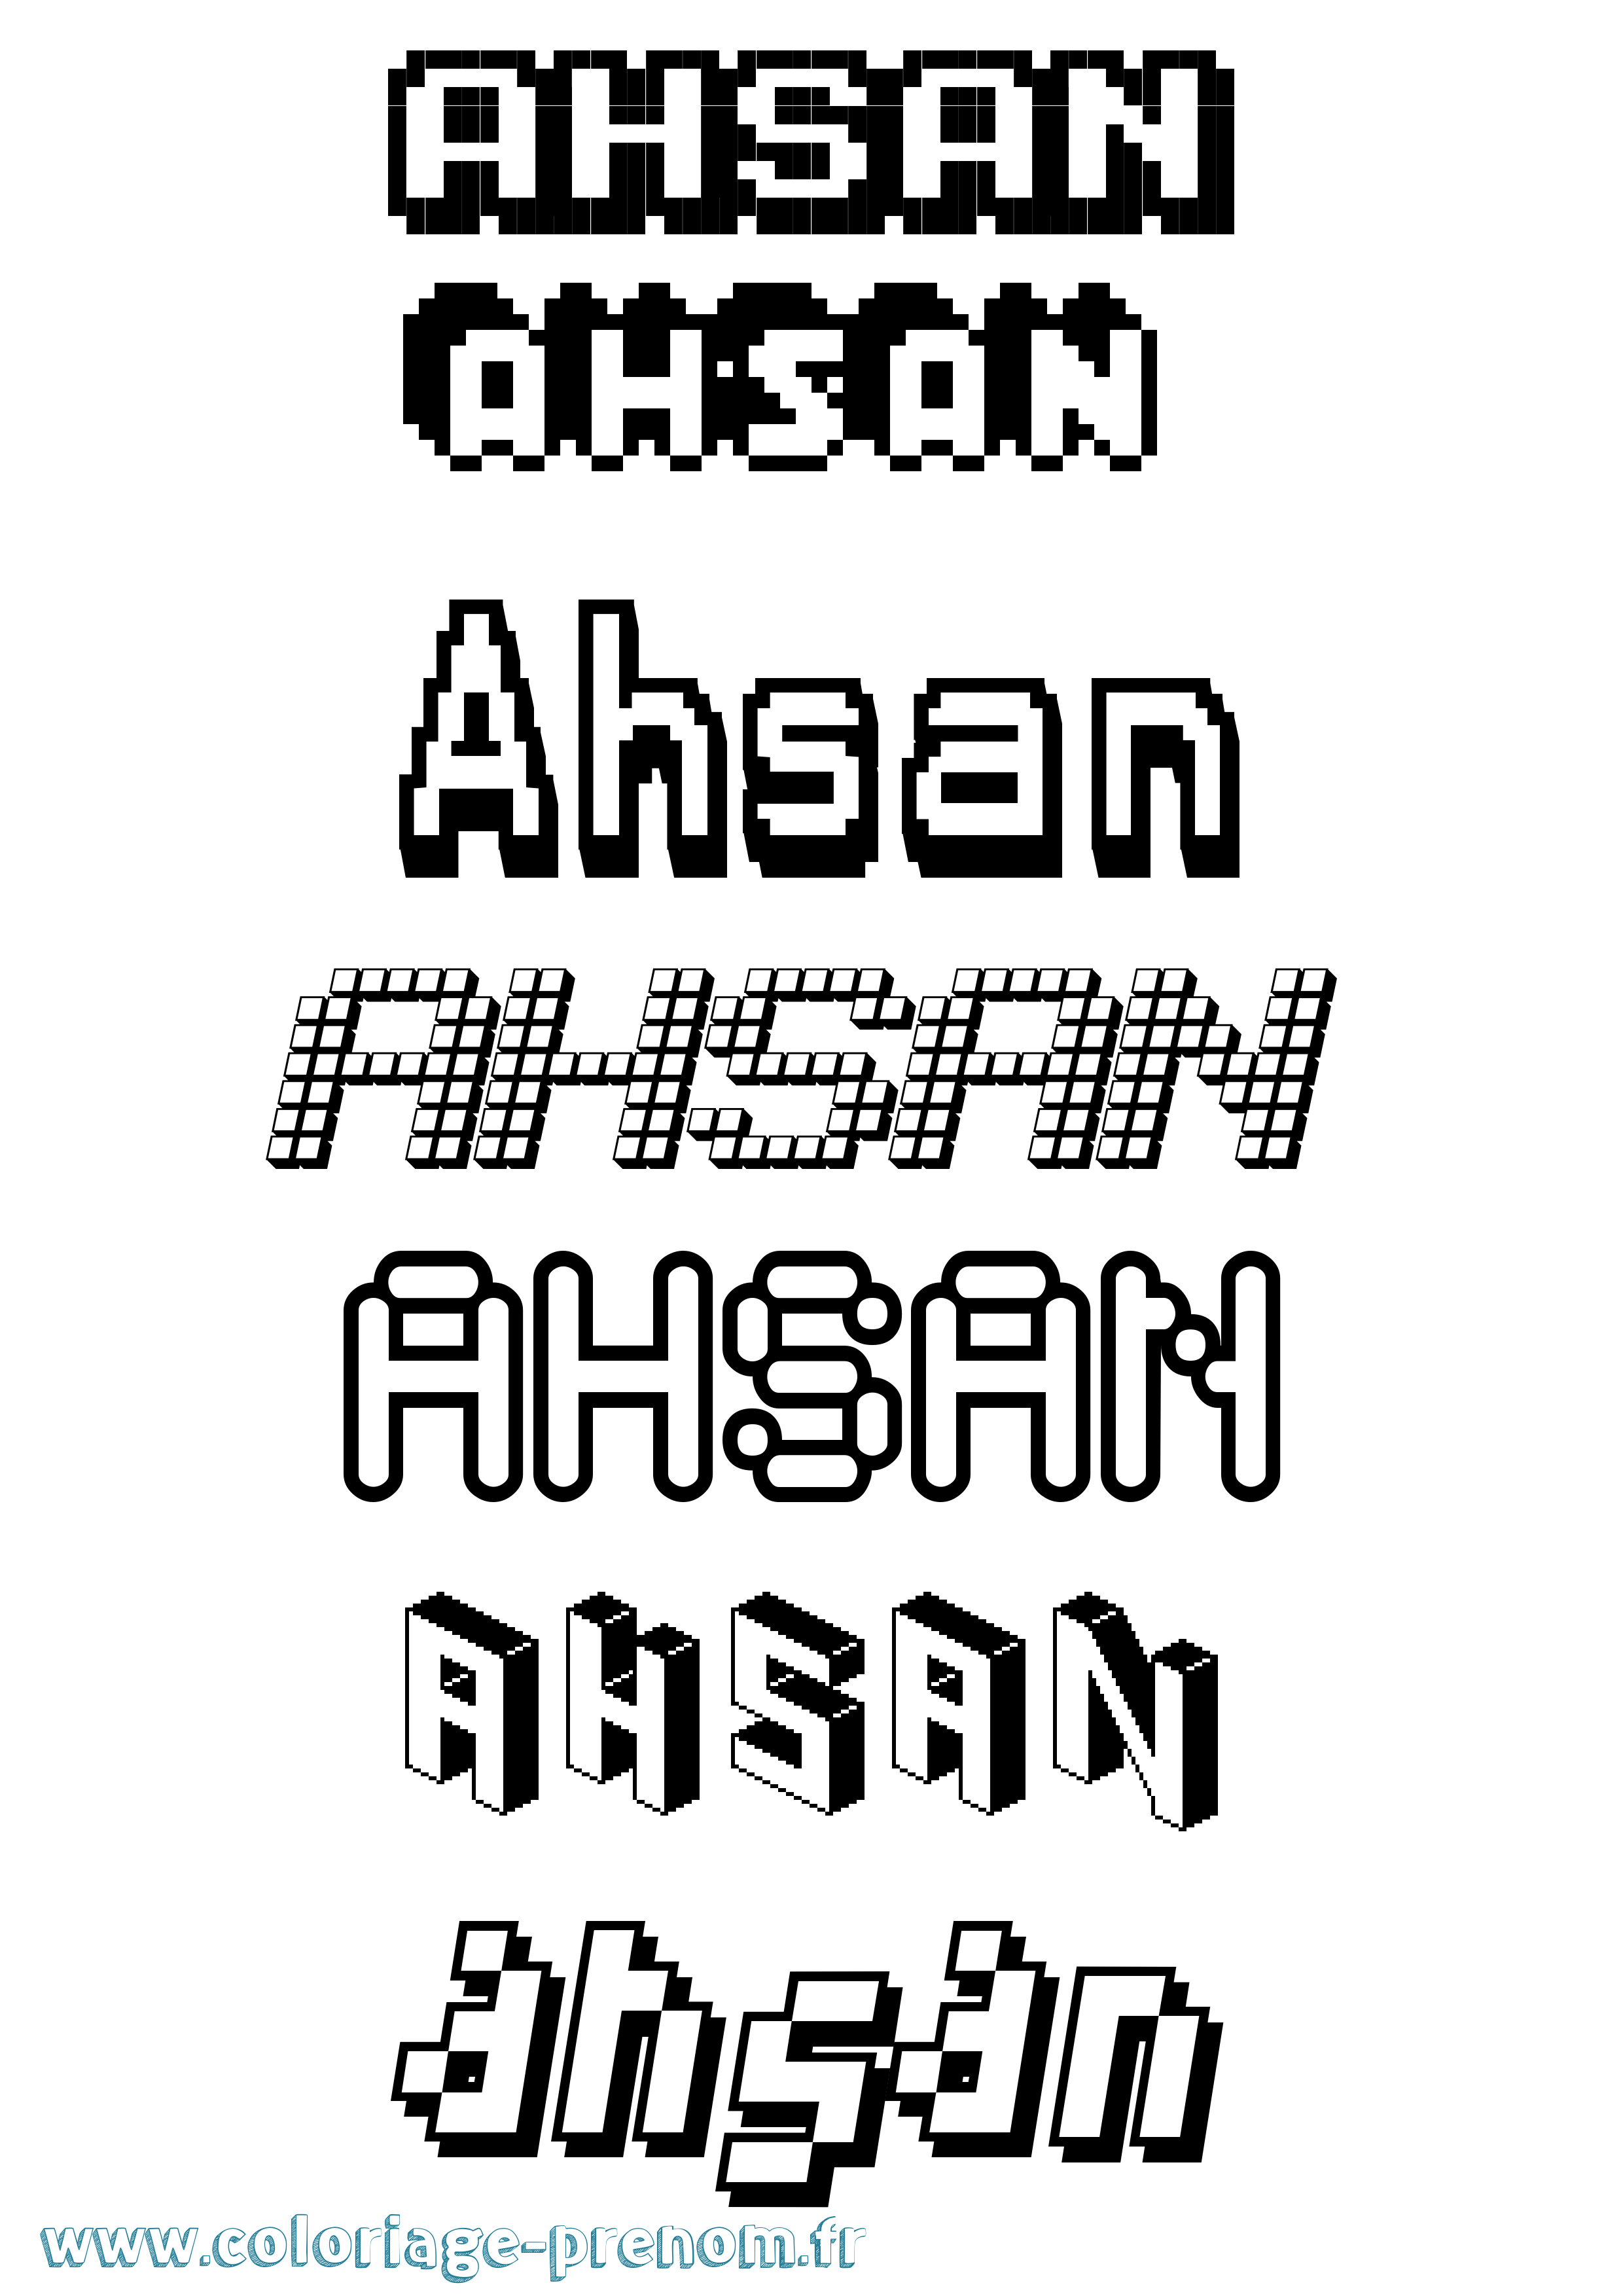 Coloriage prénom Ahsan Pixel